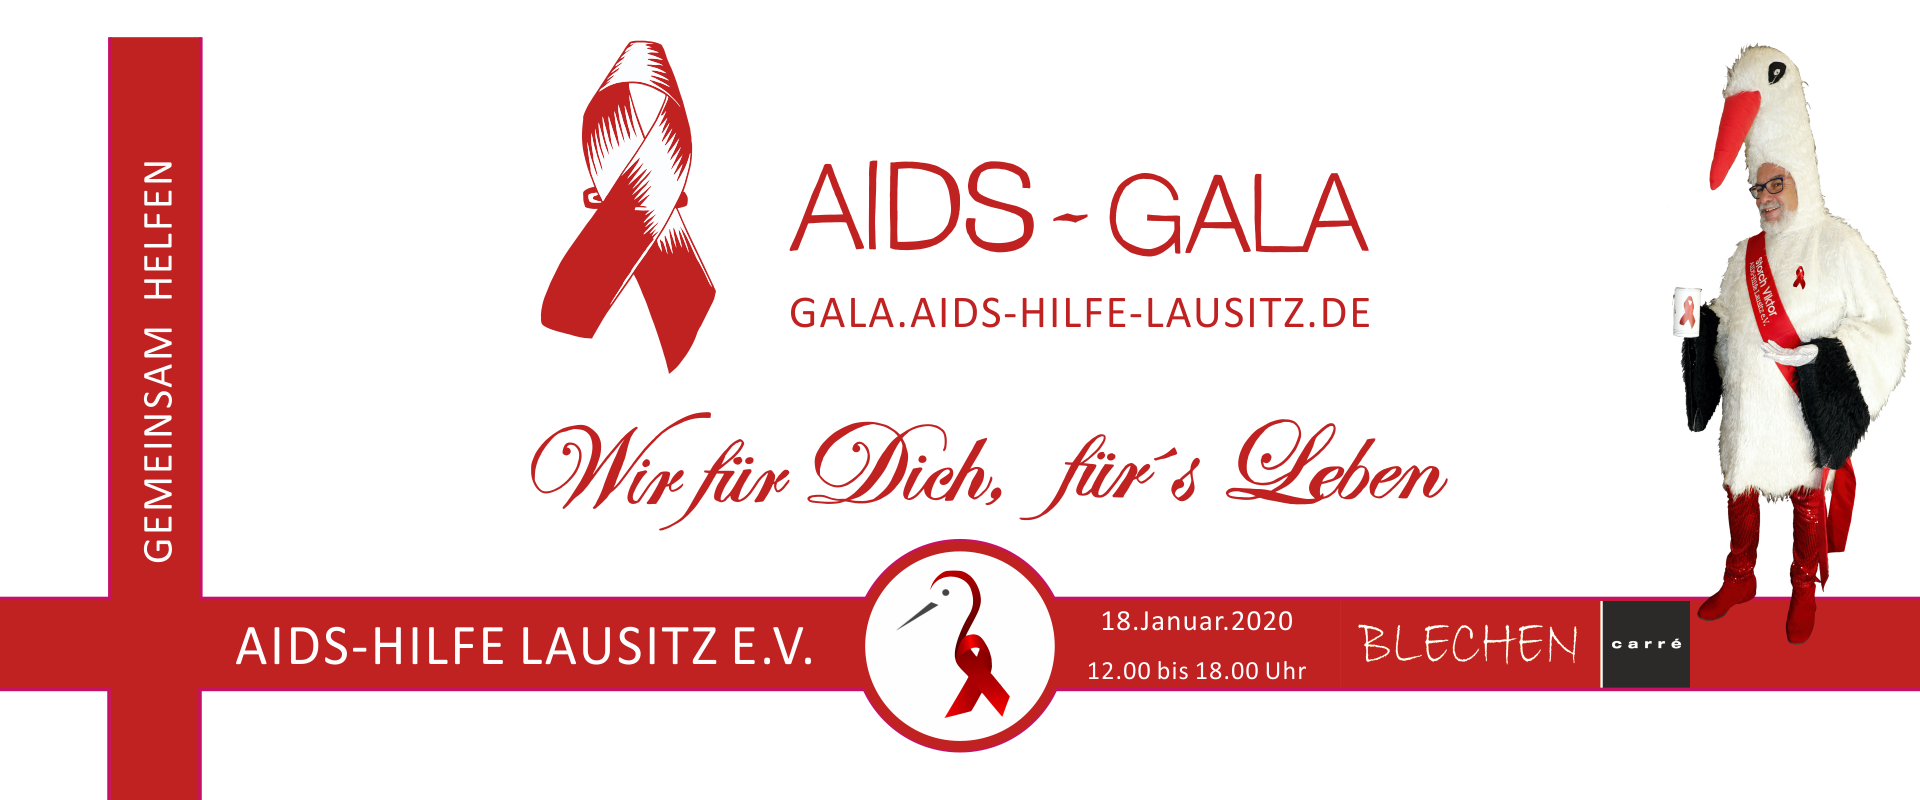 AIDS Gala Banner 